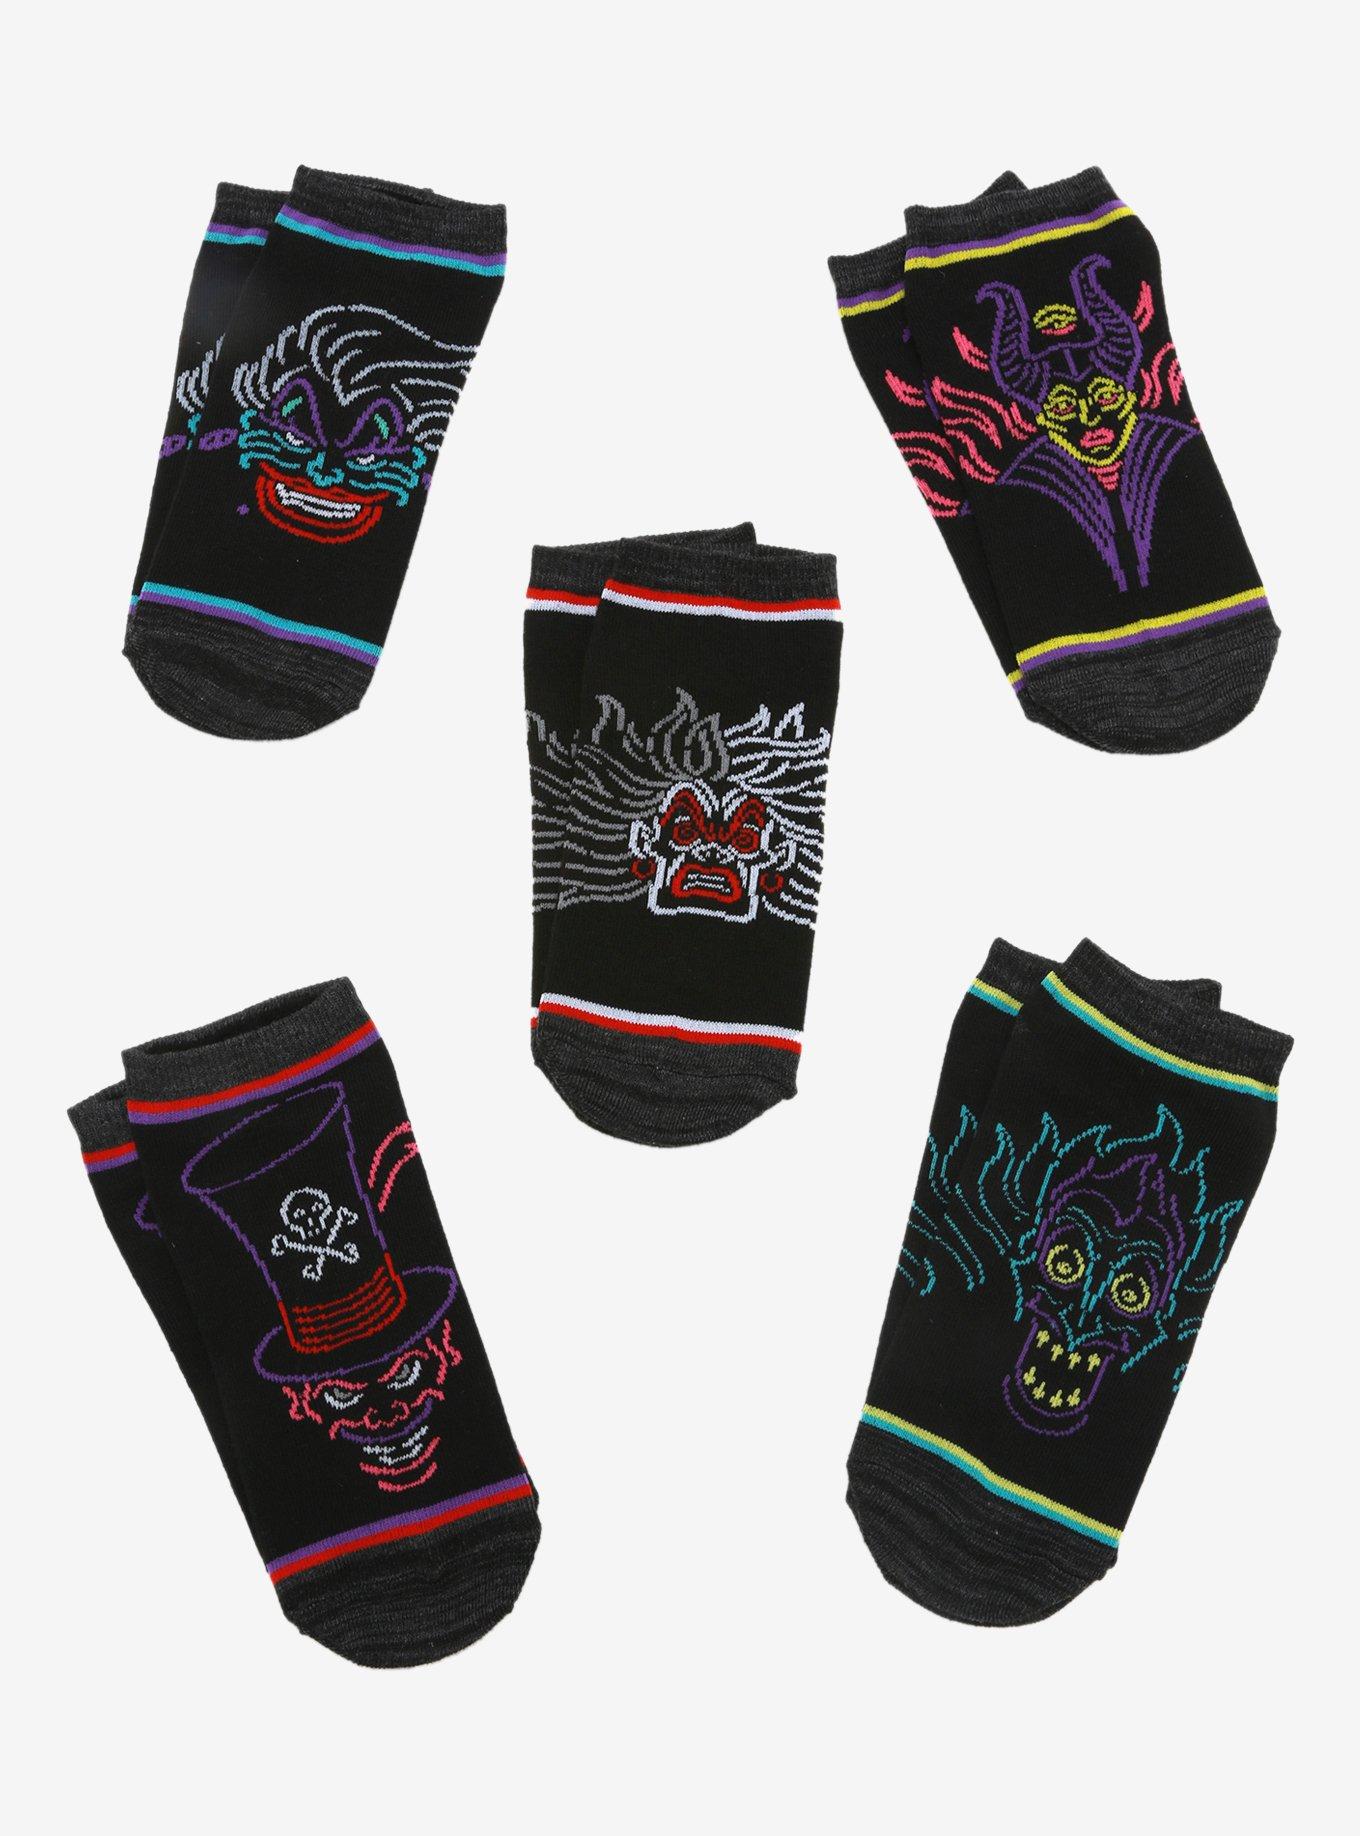 Disney Villains Neon Ankle Sock Set - BoxLunch Exclusive, , alternate